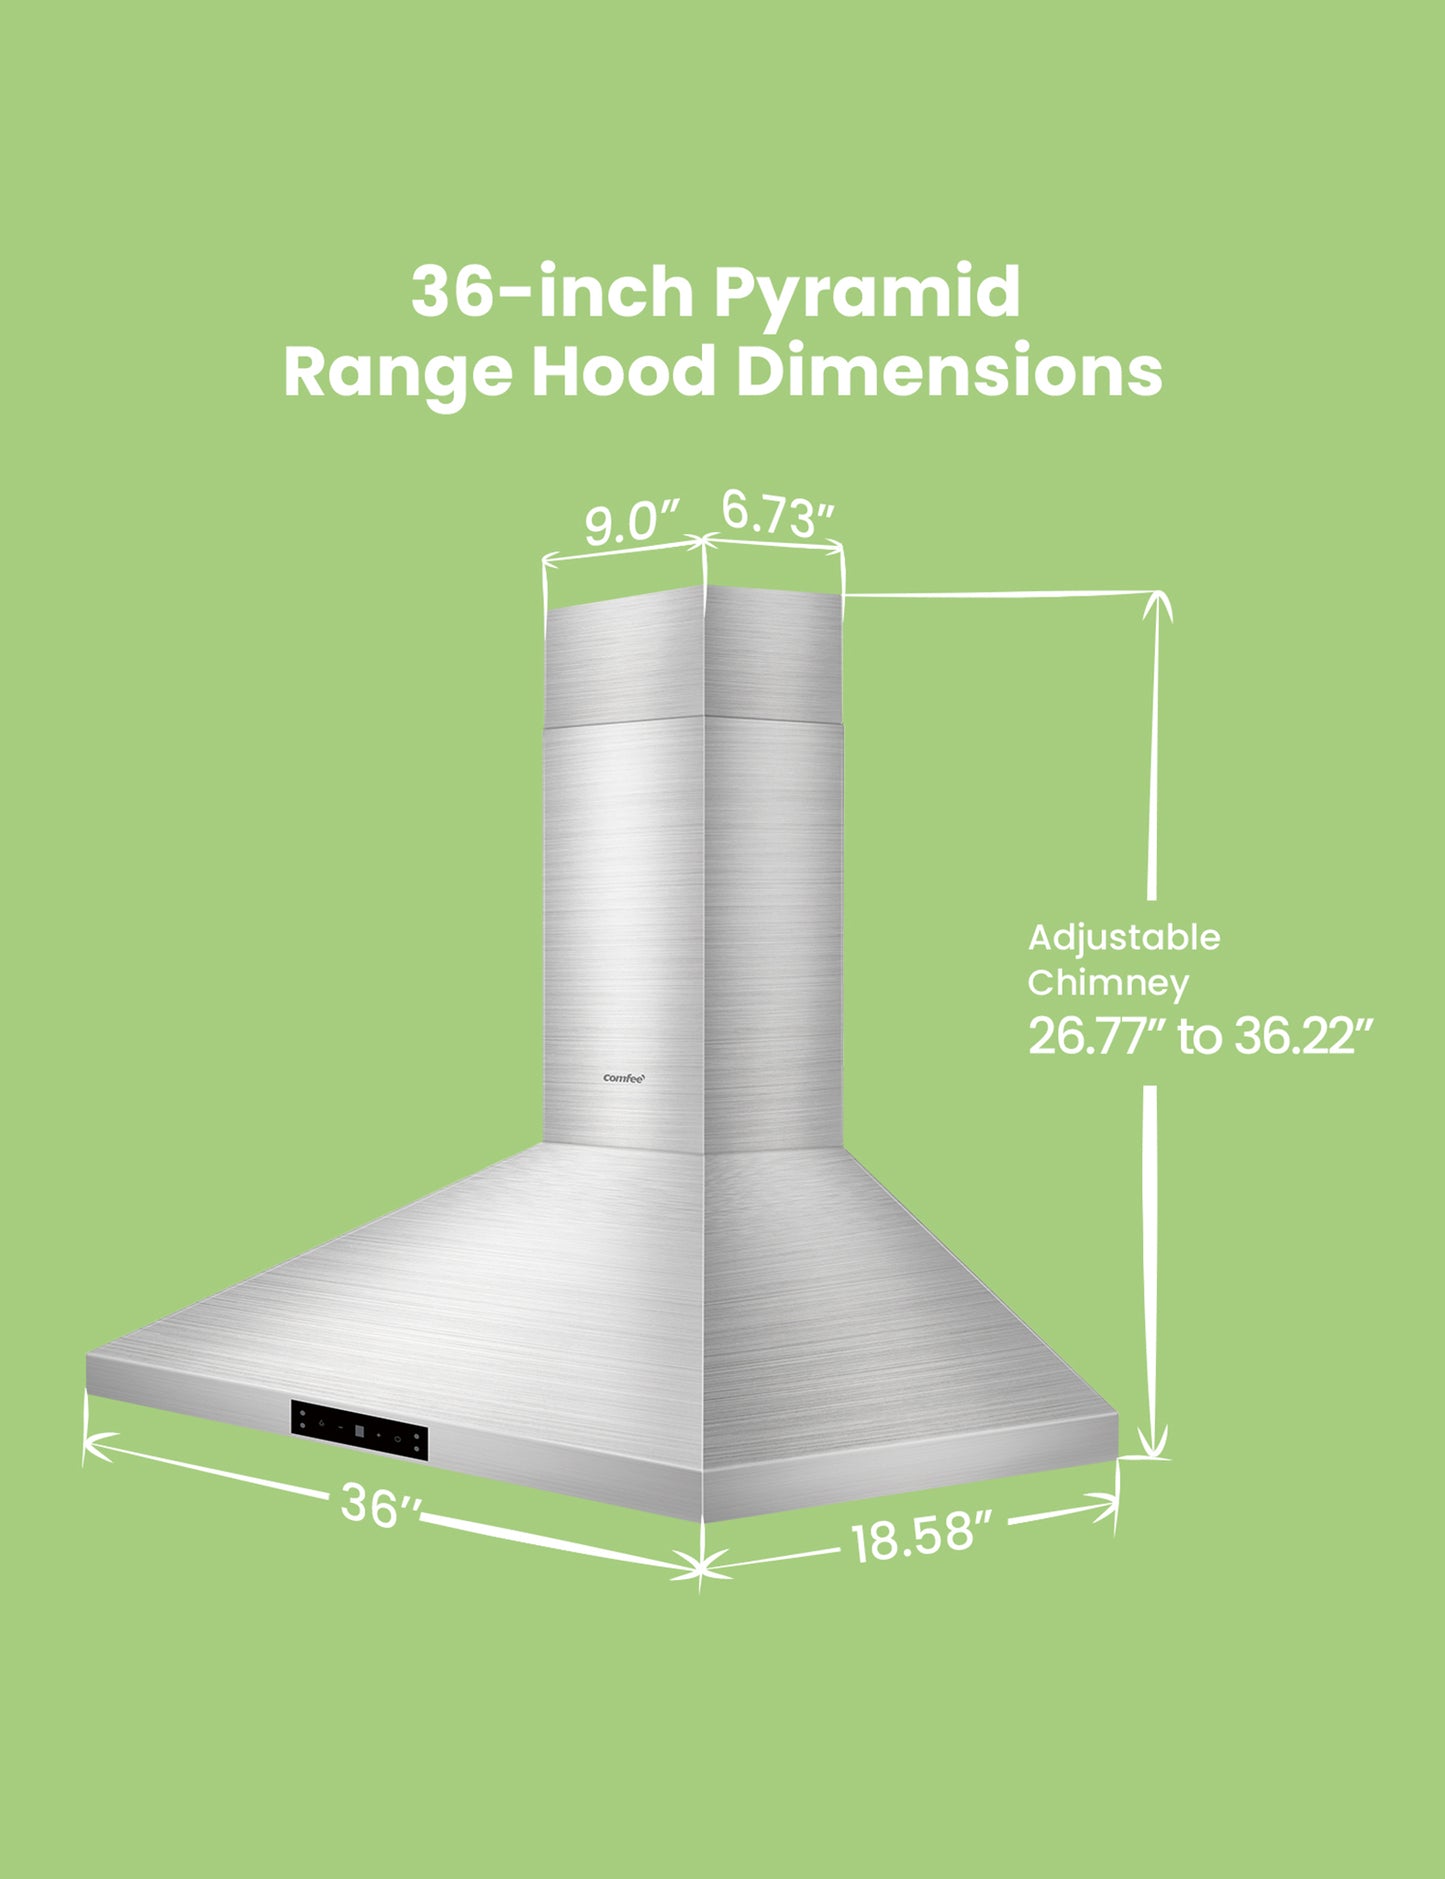 measurements of the comfee pyramid range hood